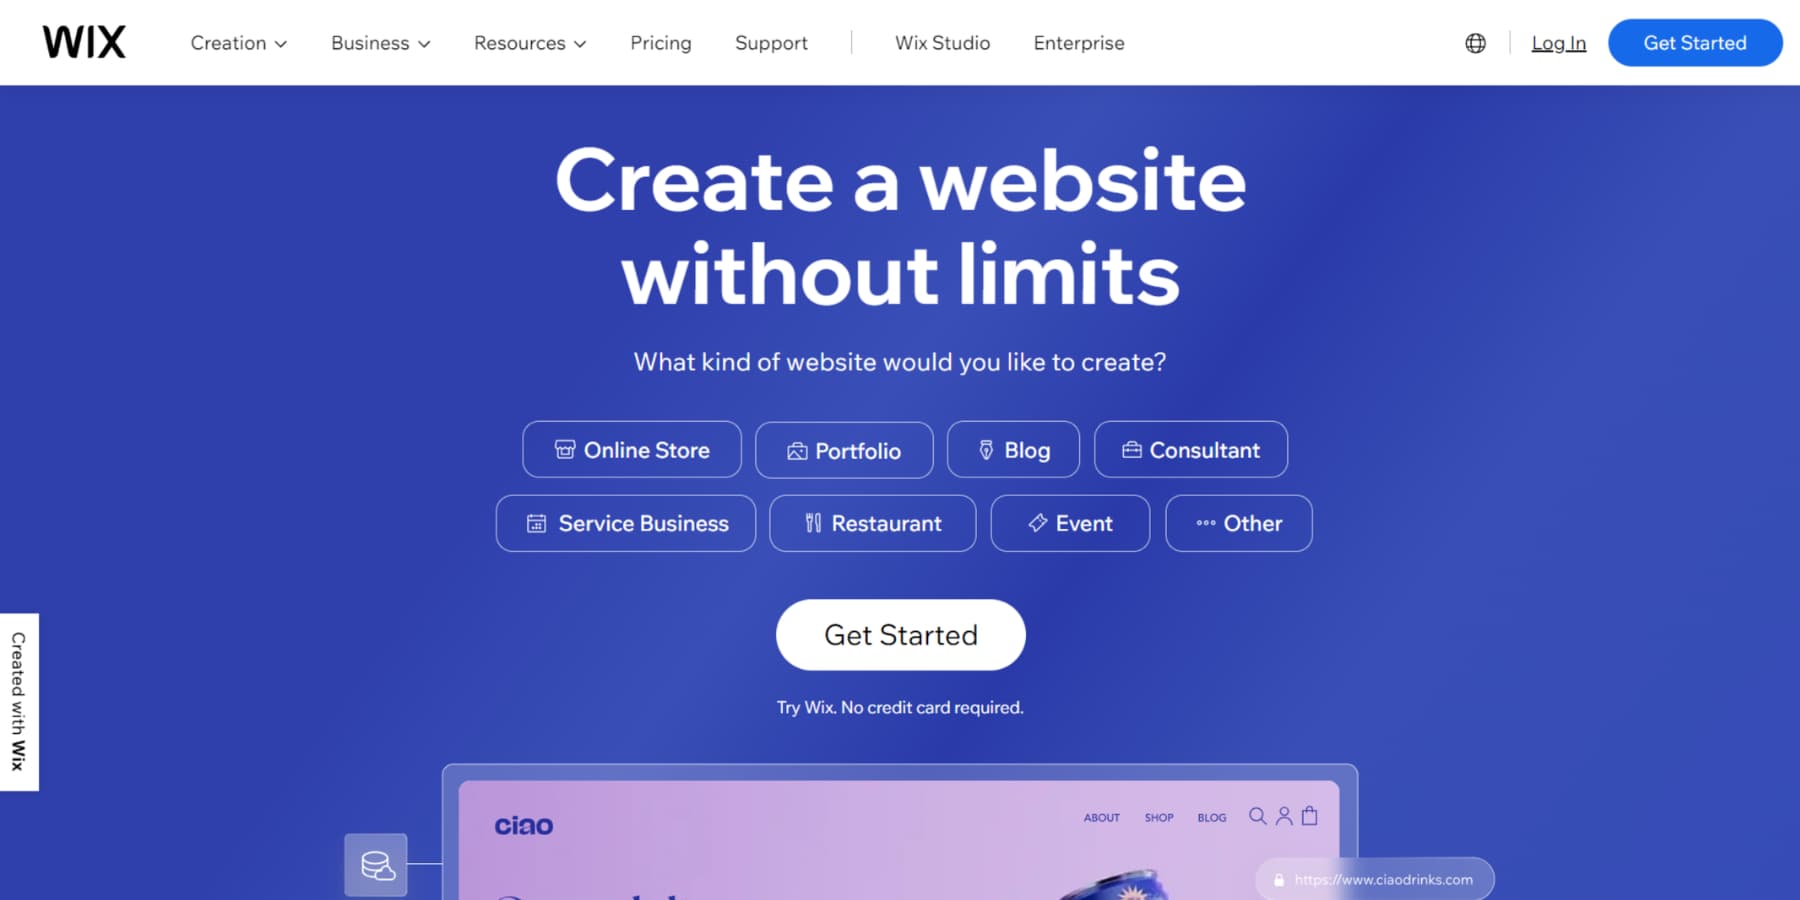 A screenshot of Wix's Homepage